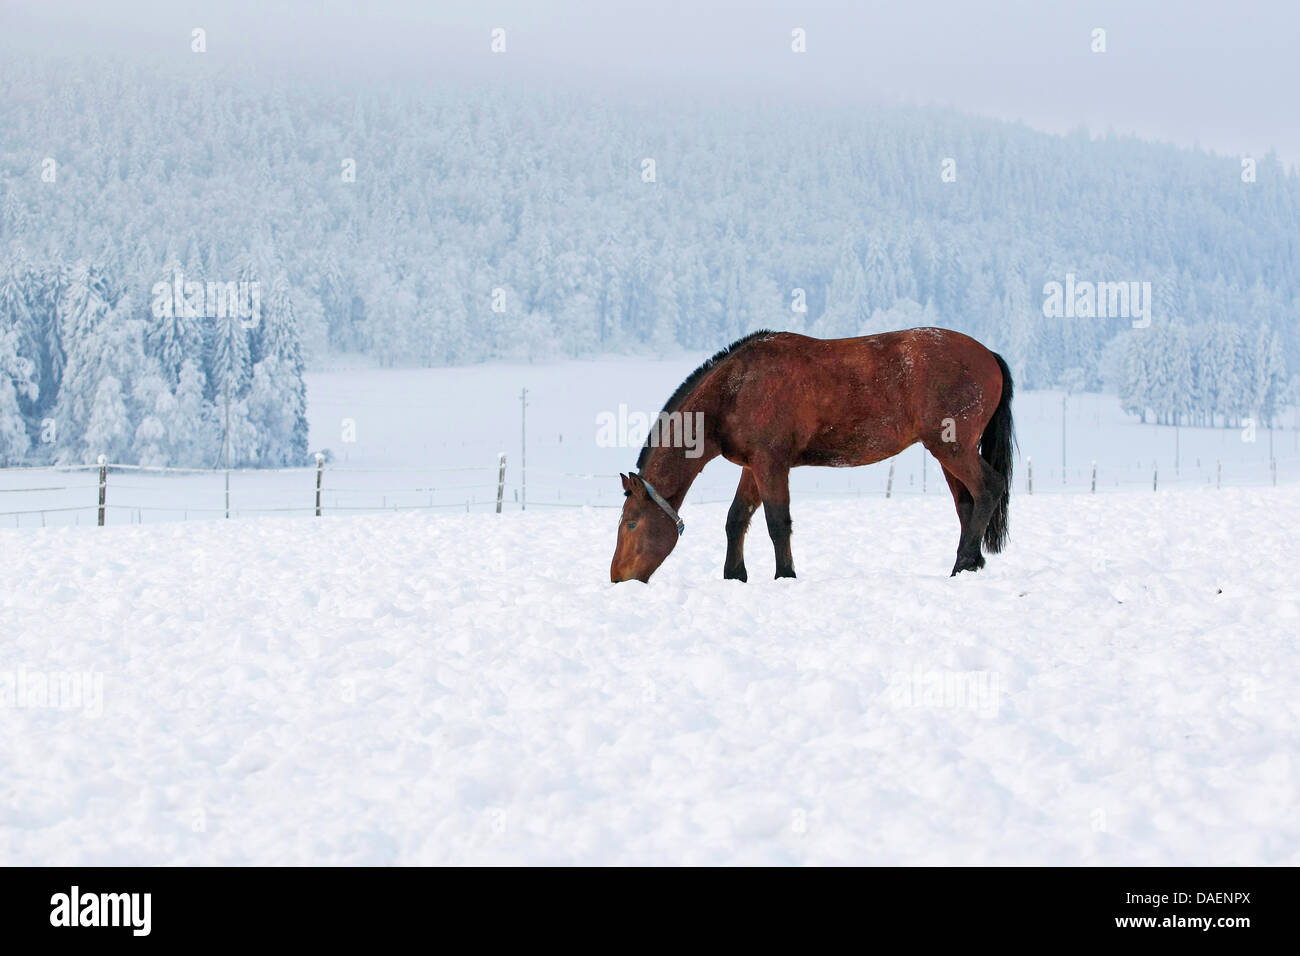 Einsiedler caballo, Franches Montagnes (Equus caballus przewalskii. f), marrón caballo buscando alimento en la nieve, Suiza Foto de stock